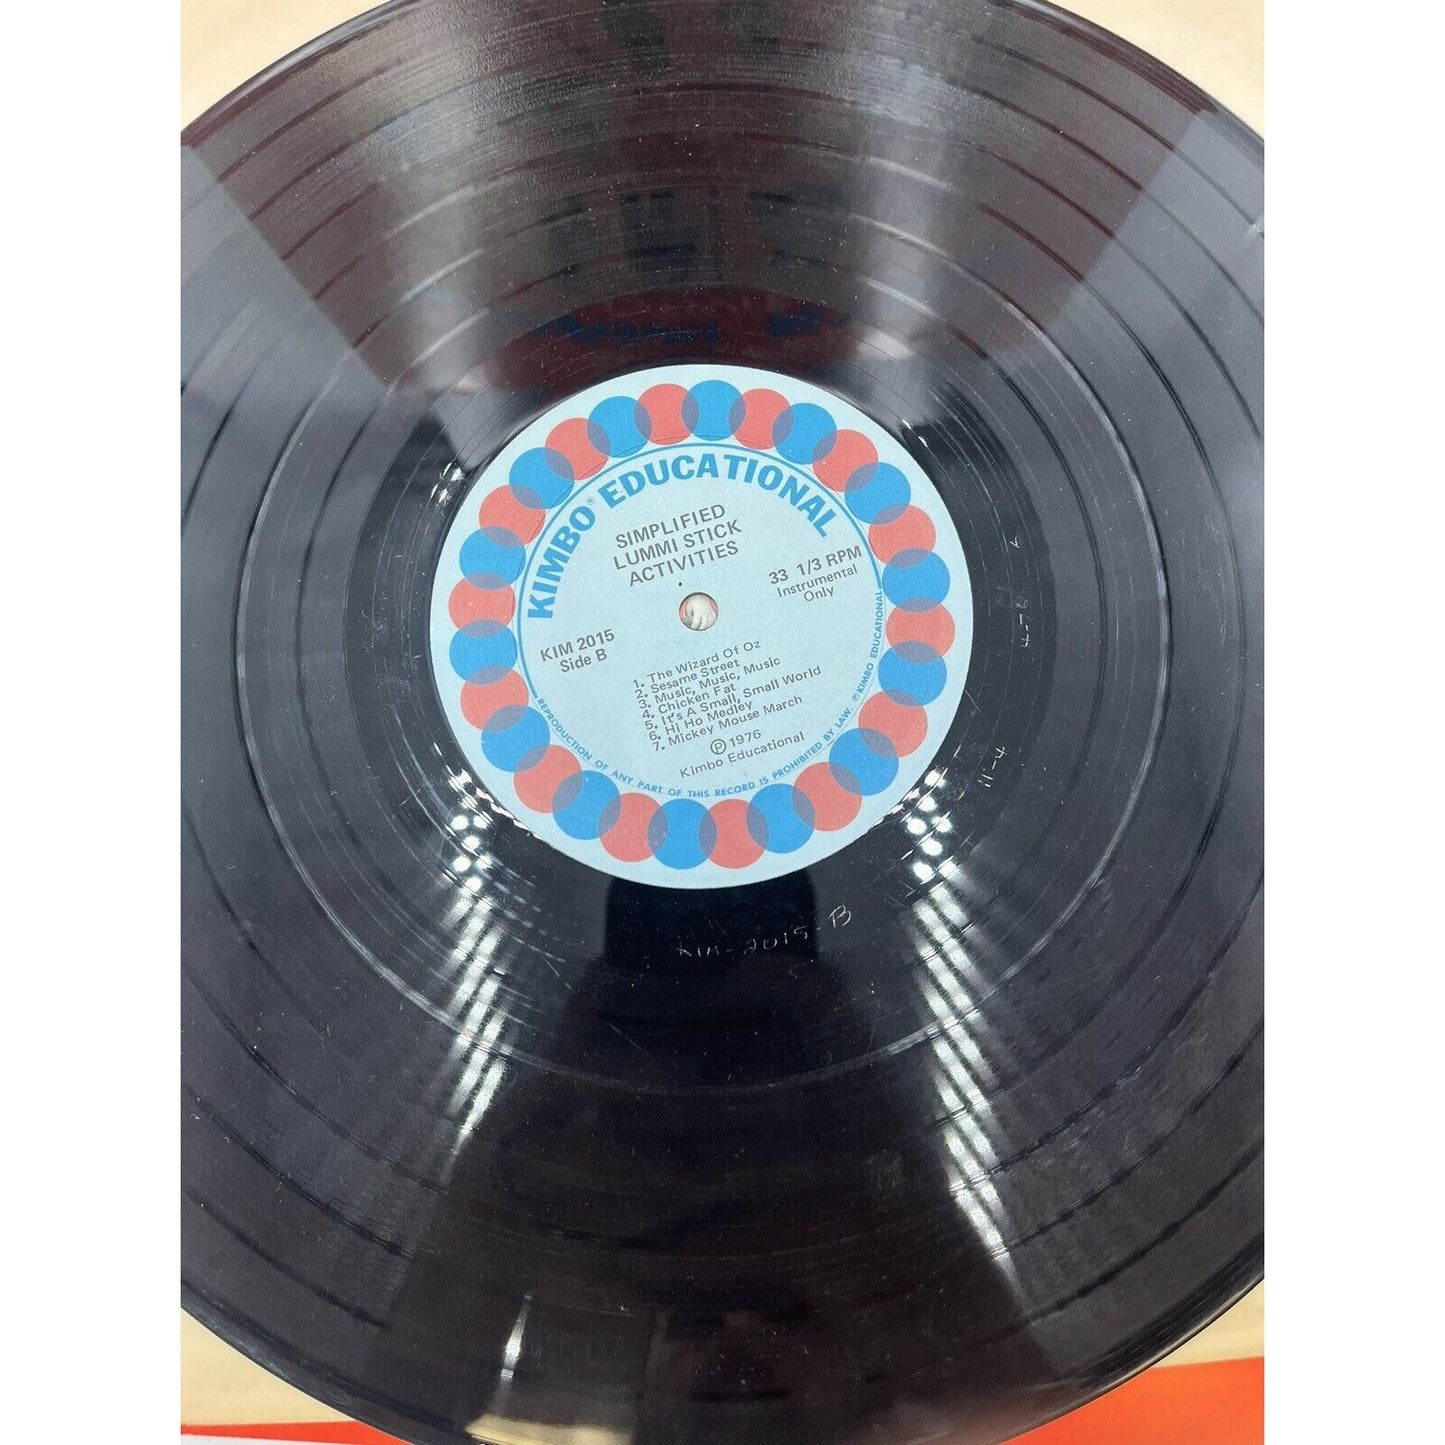 1976 Long Branch New Jersey Kimbo Lummi Stick Activities Vinyl LP Record & Book